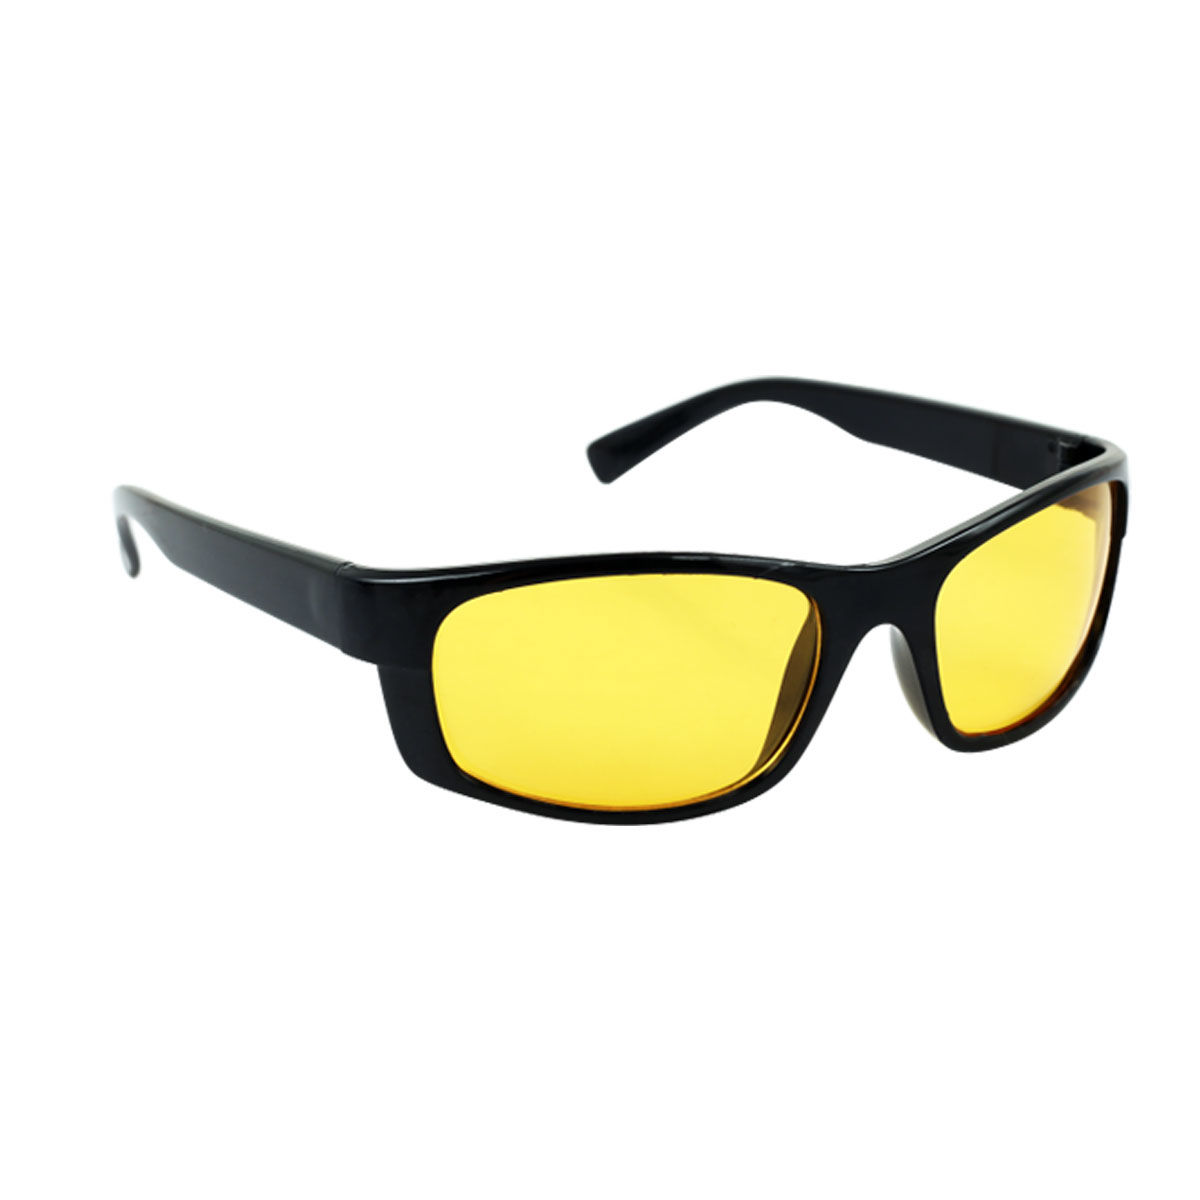 Know more about Titanium Sunglasses post thumbnail image